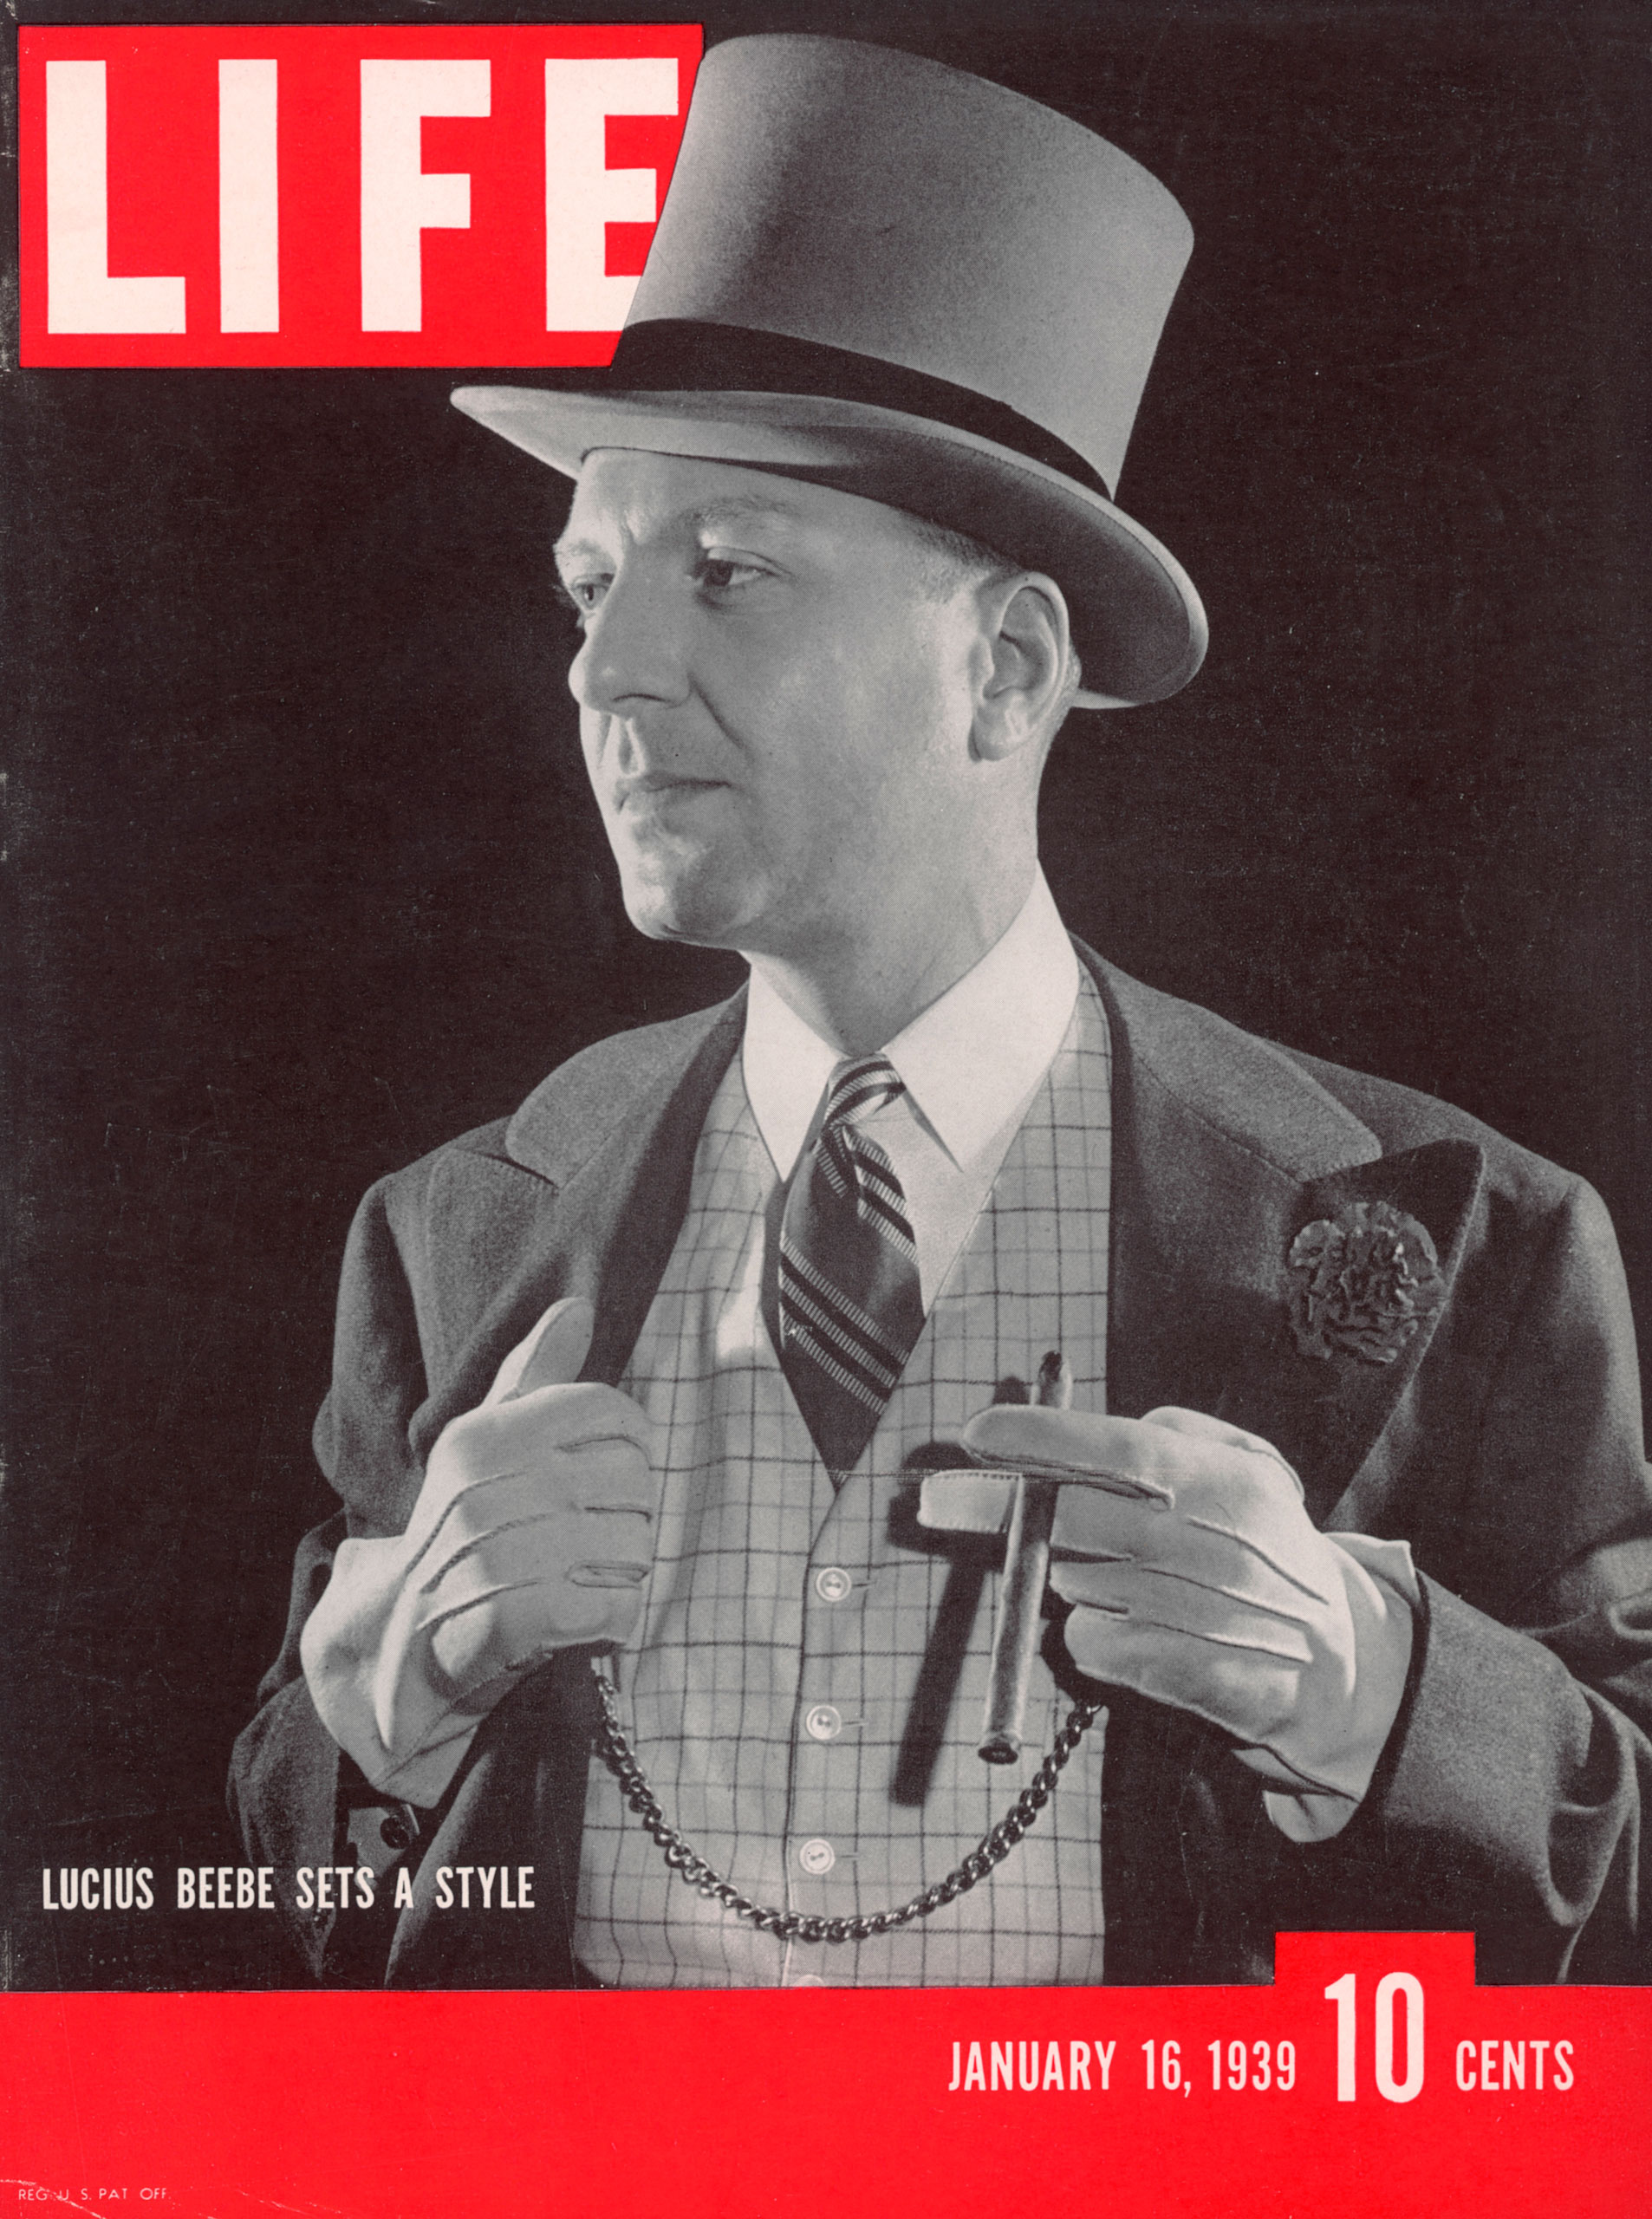 January 16, 1939 cover of LIFE magazine.